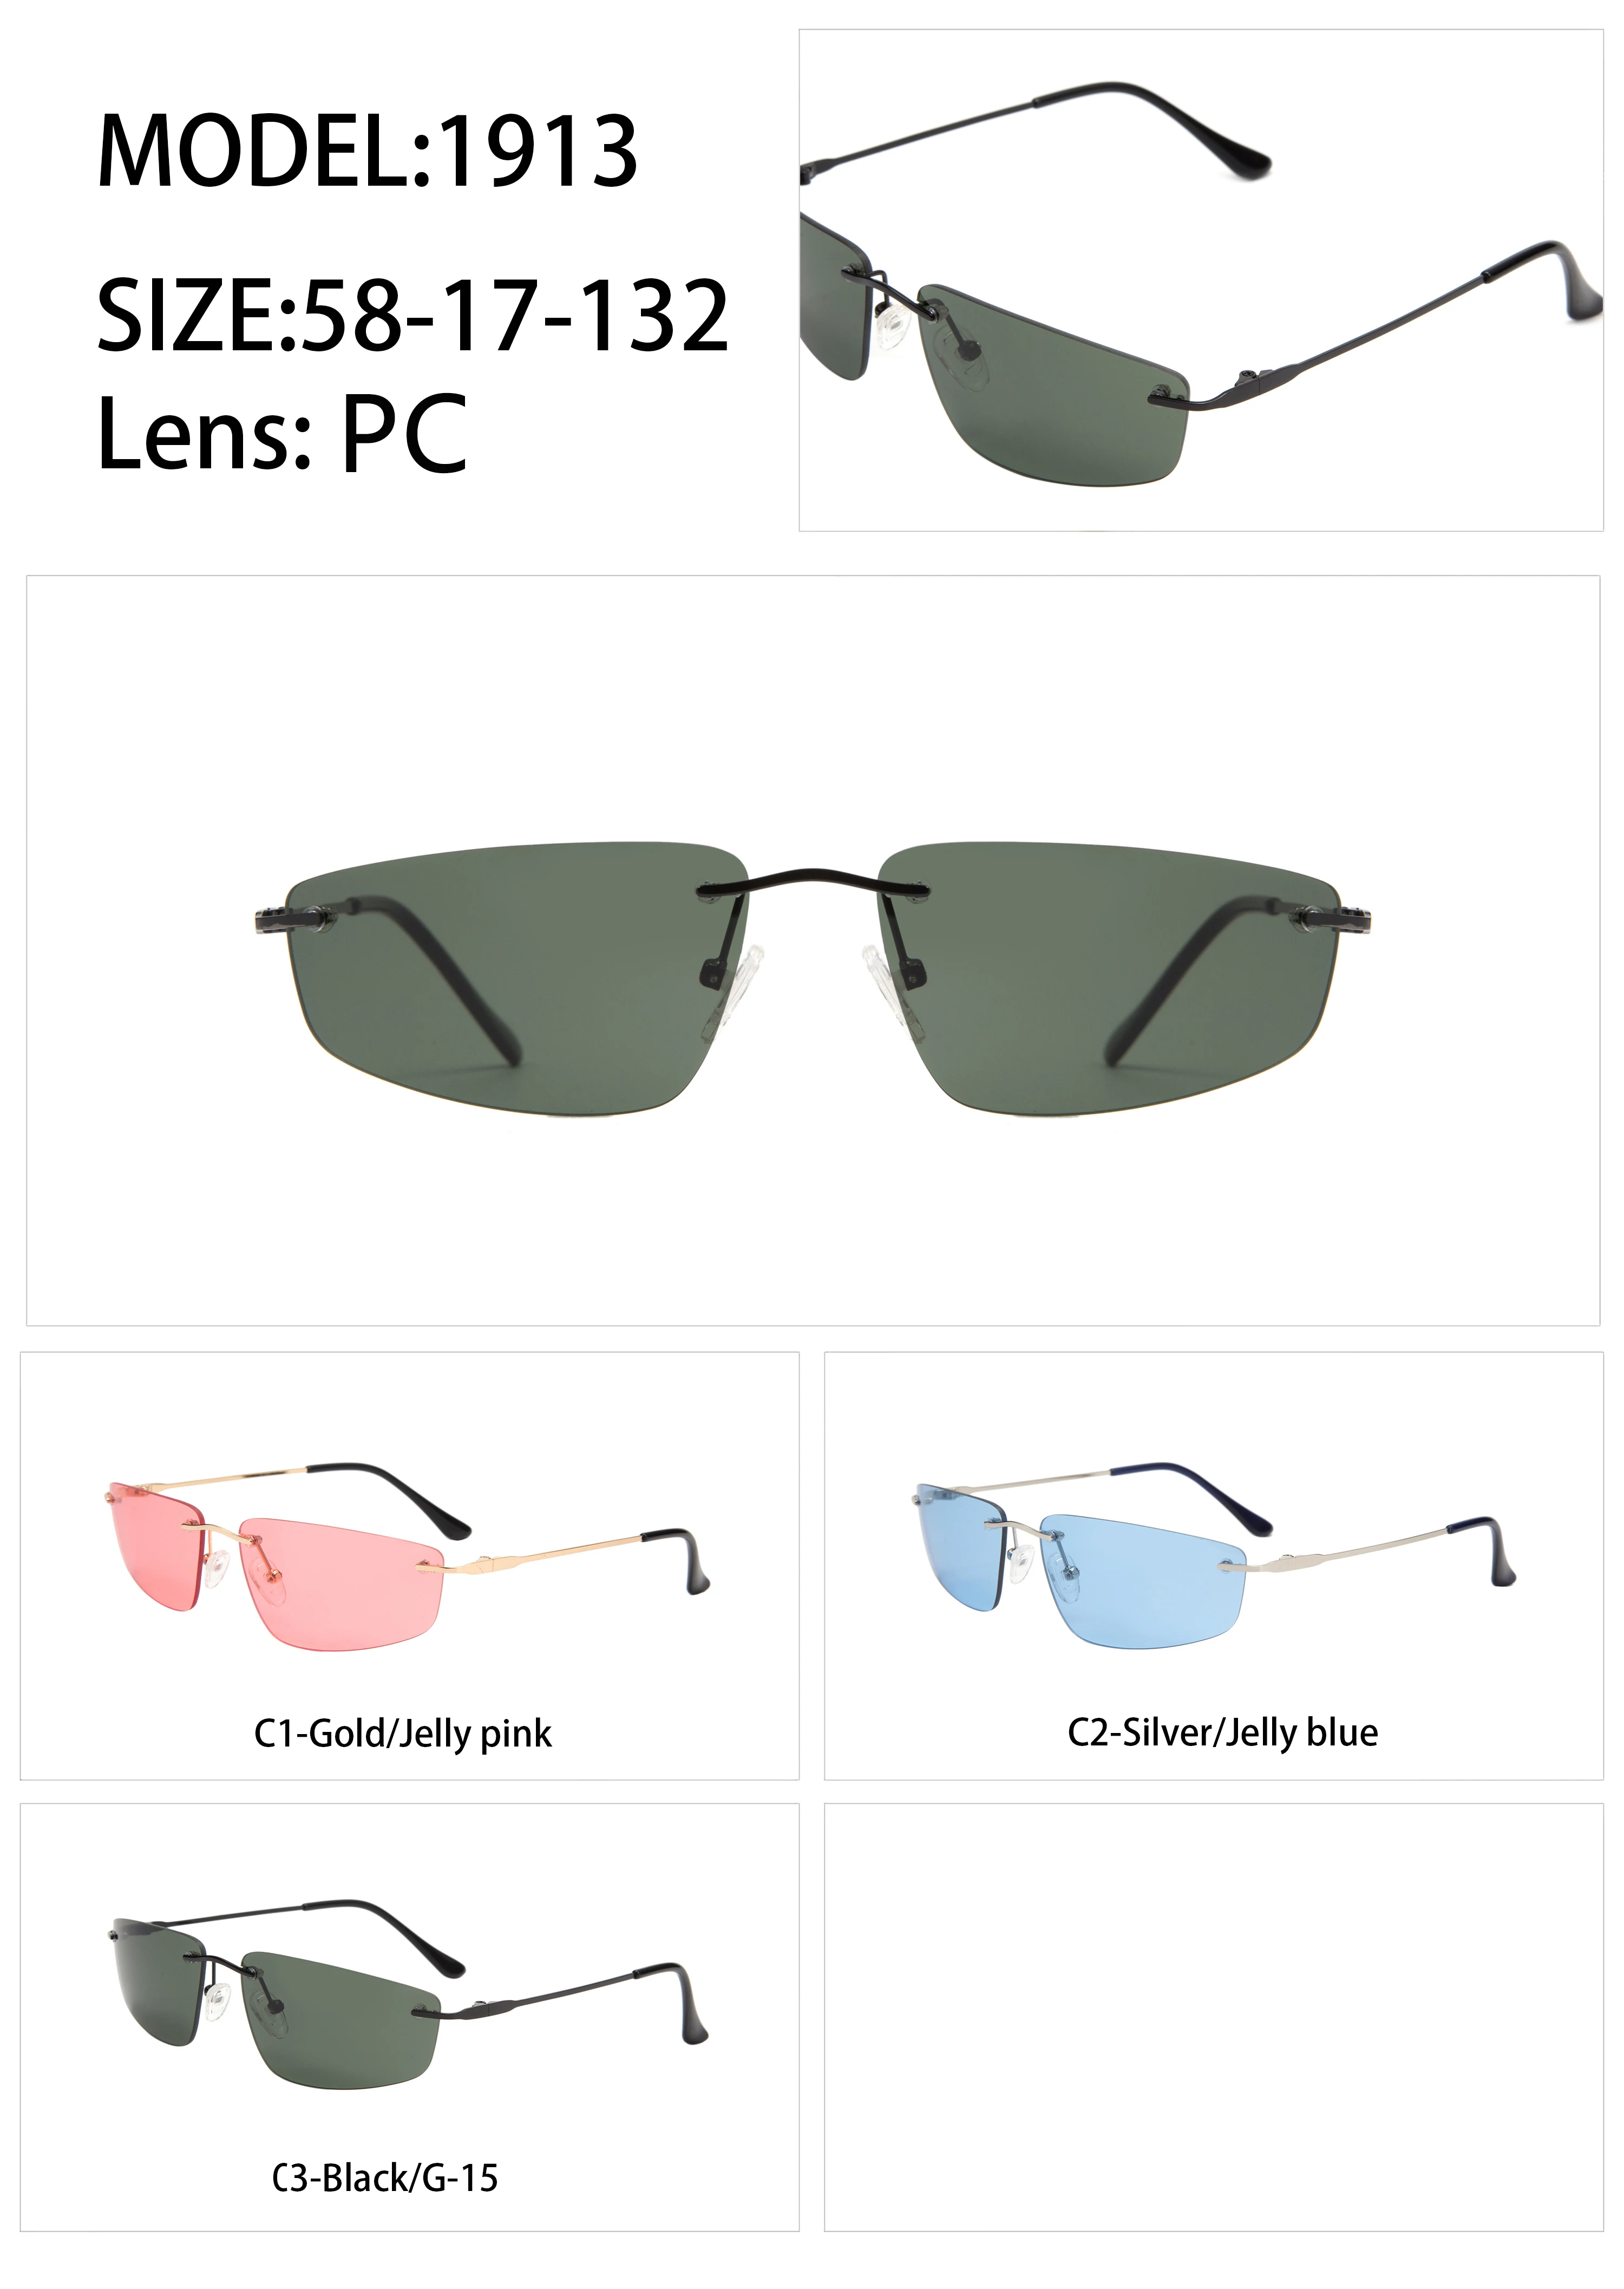 EUGENIA New Design Wholesale Custom Logo Fashionable UV400 Polarized Rimless Plastic Light Sunglasses